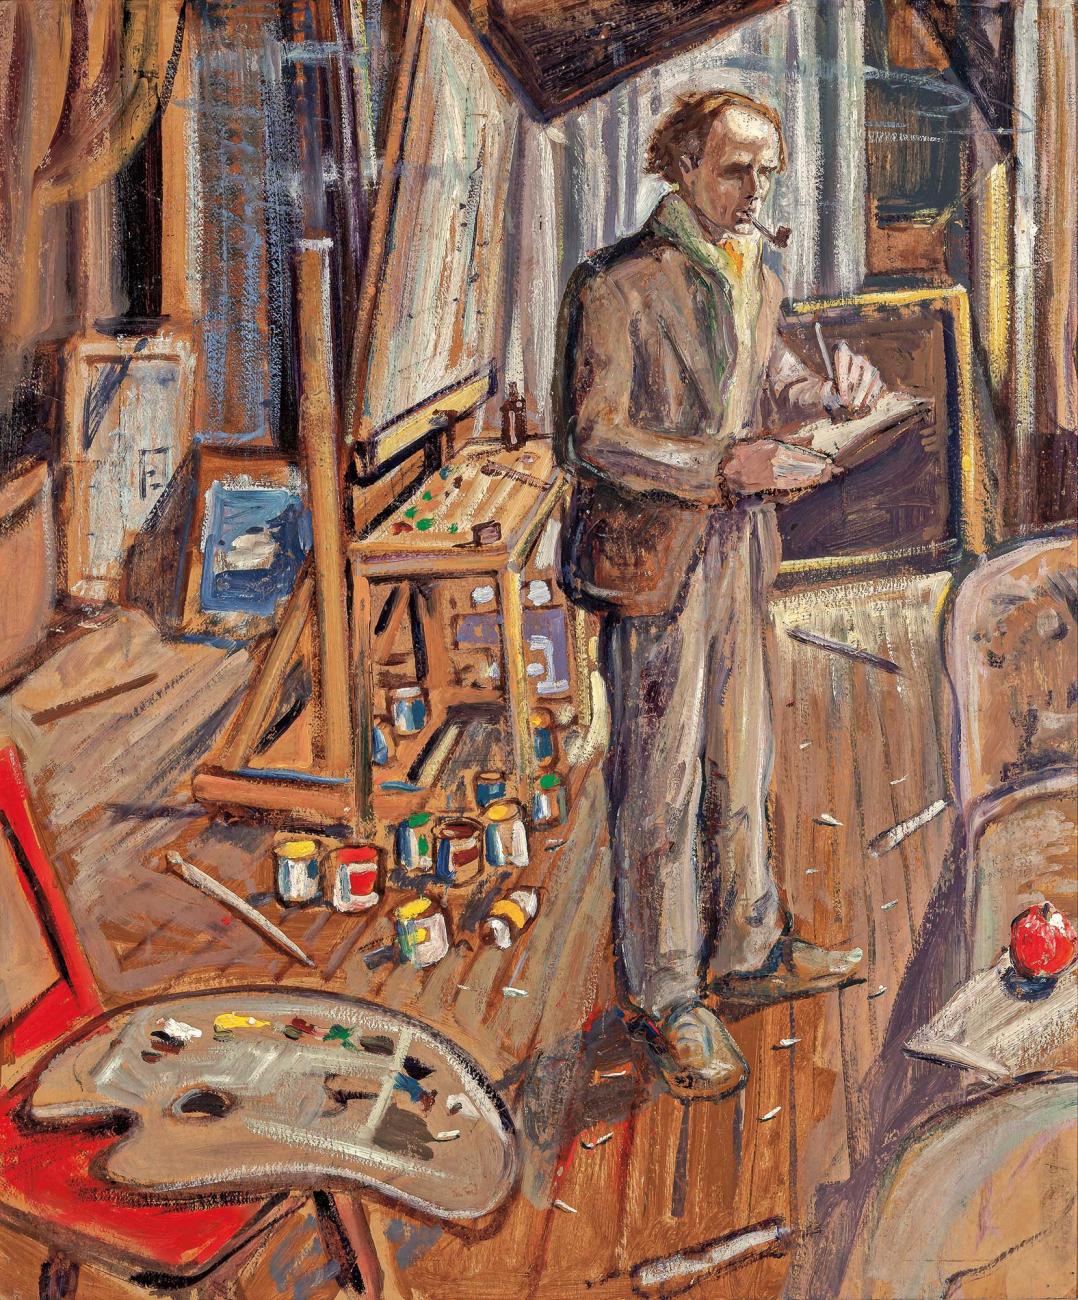 Self-portrait painting of Arthur Lismer standing in a painter's studio.